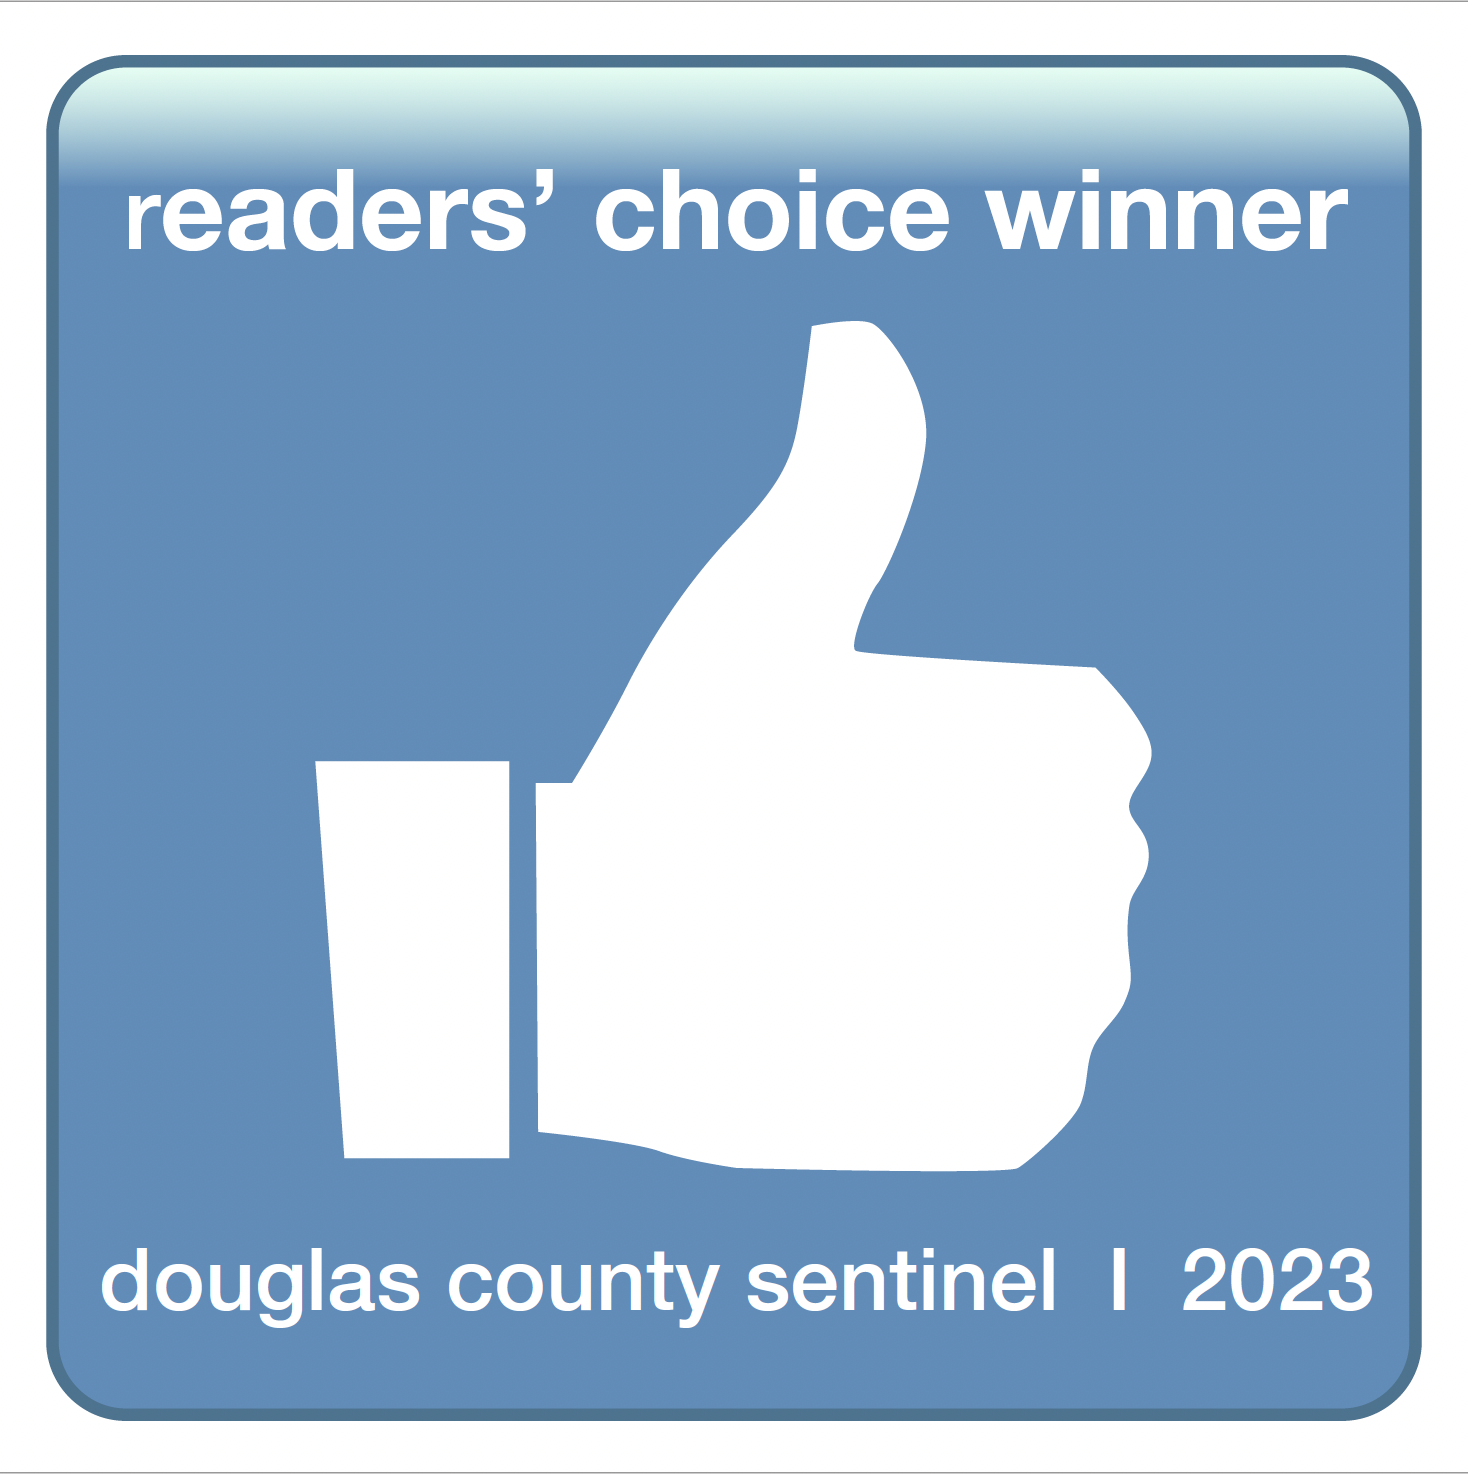 Douglas County Sentinel 2023
Readers' Choice Winner